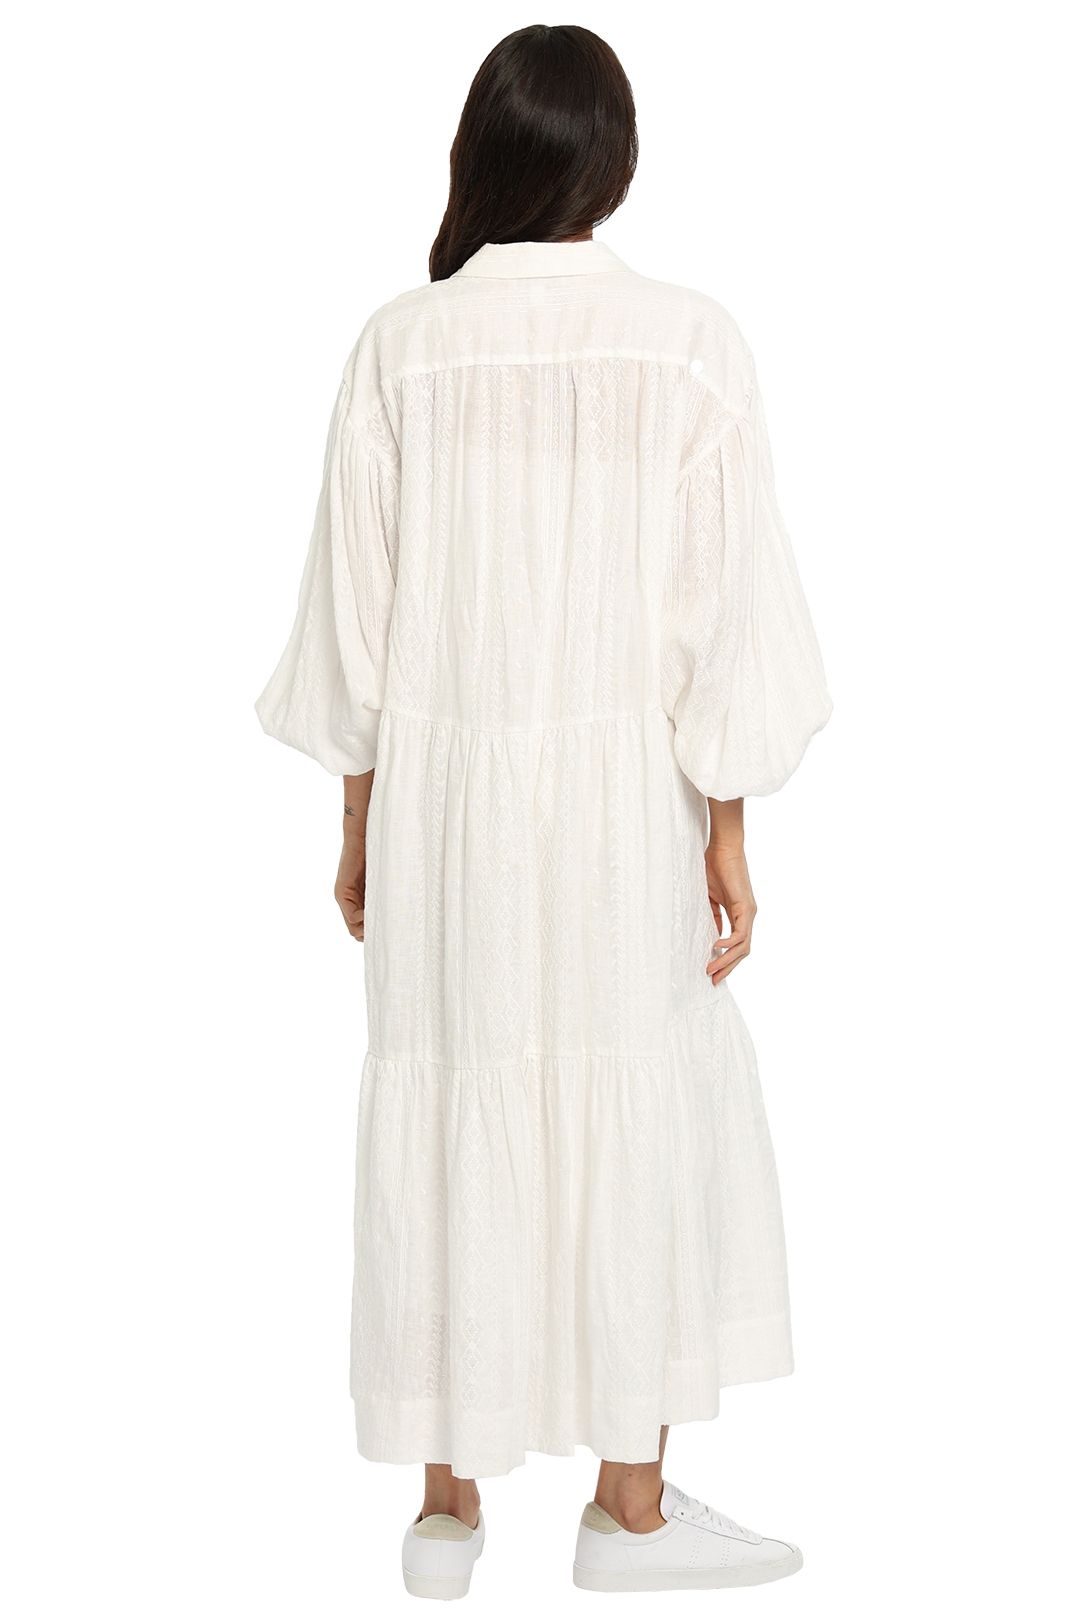 Shona Joy Cosmo Tiered Midi Shirt dress